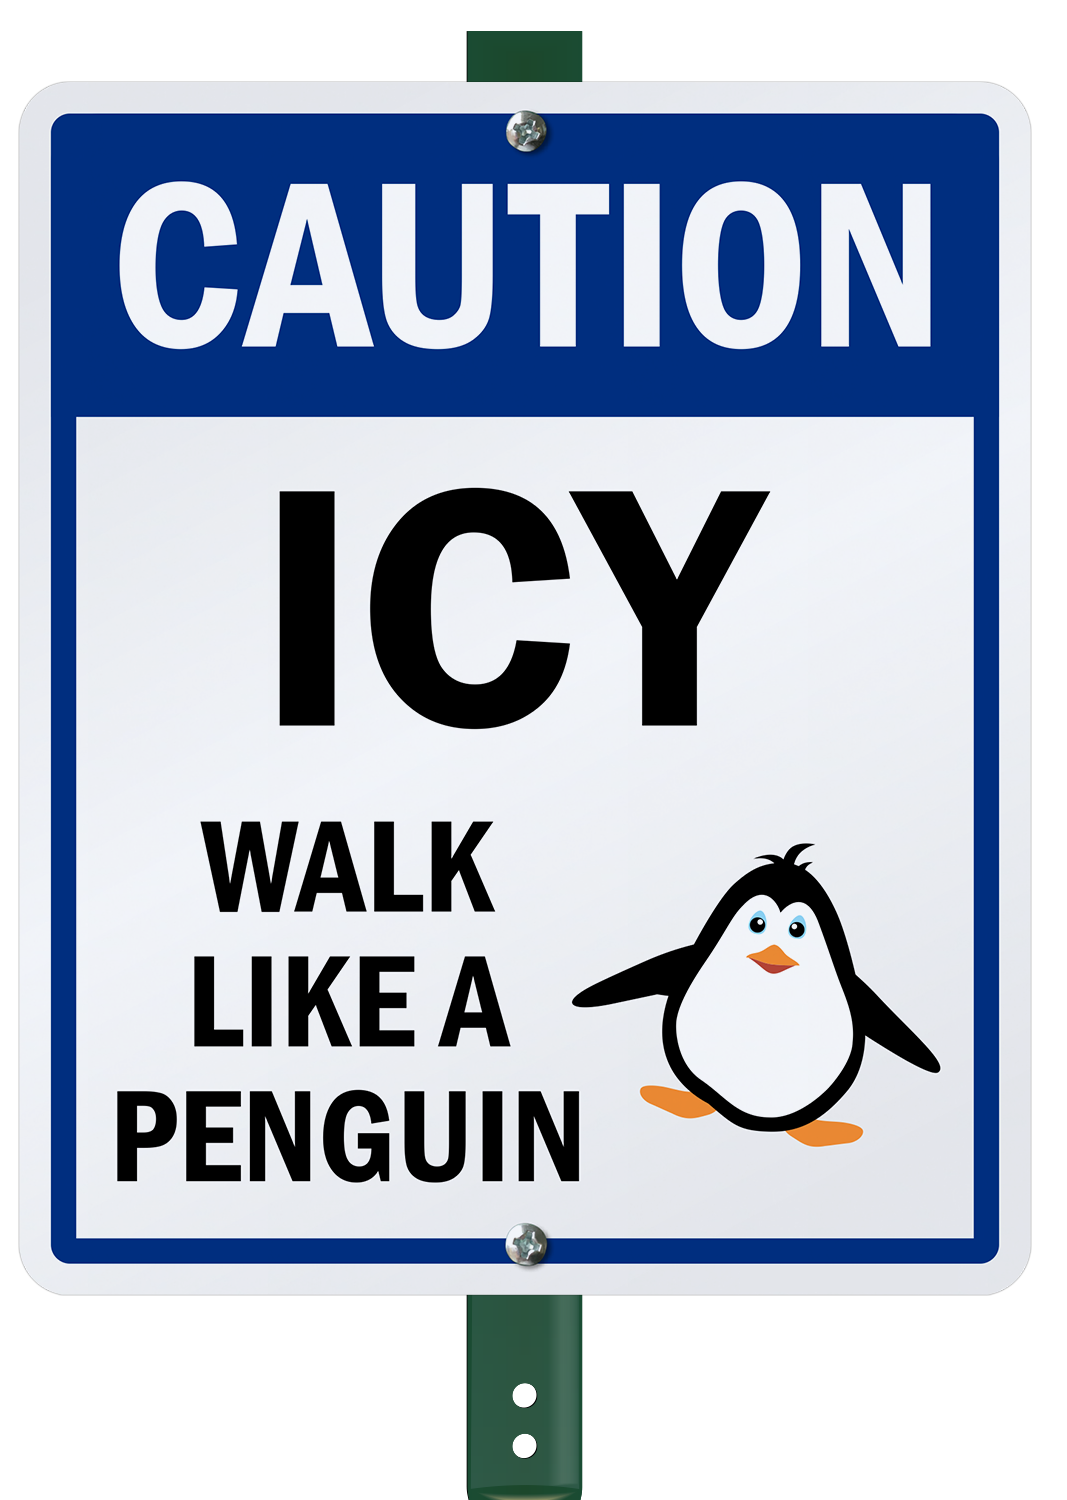 Caution ICY Walk like a penguin!